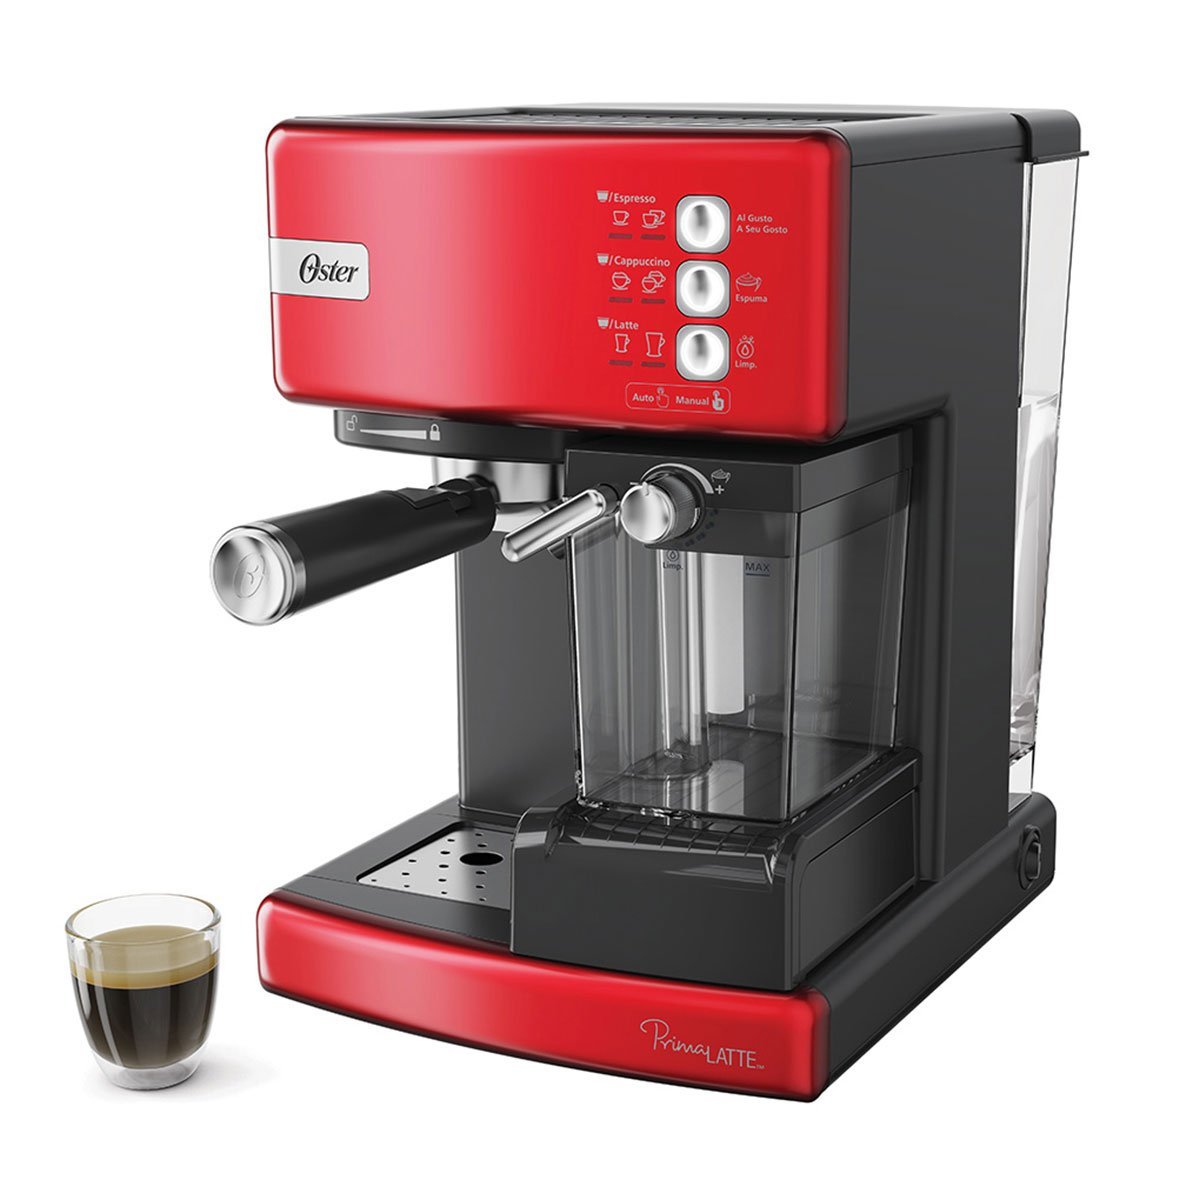 Cafetera Automática de Espresso Prima Latte Oster